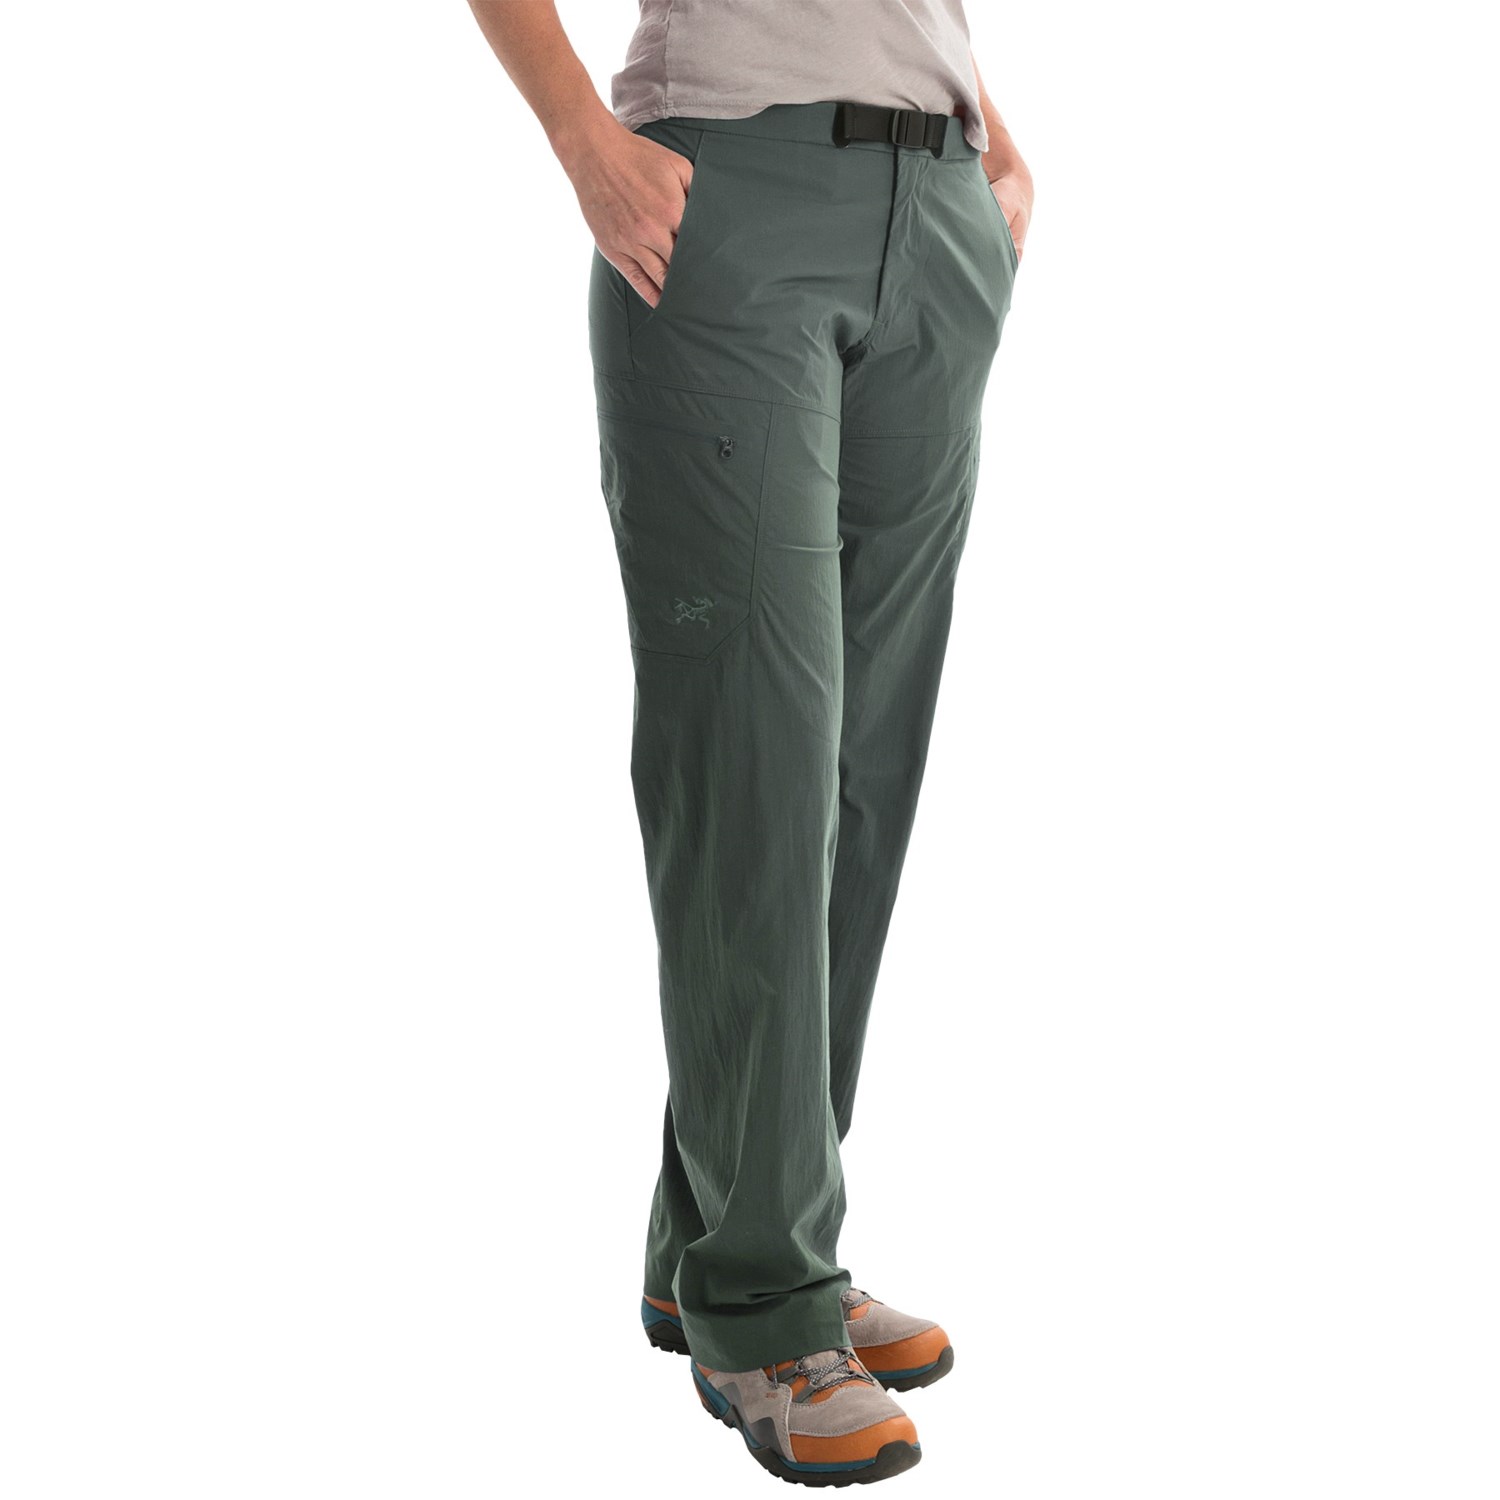 Arc'teryx Palisade Pants (For Women) - Save 49%